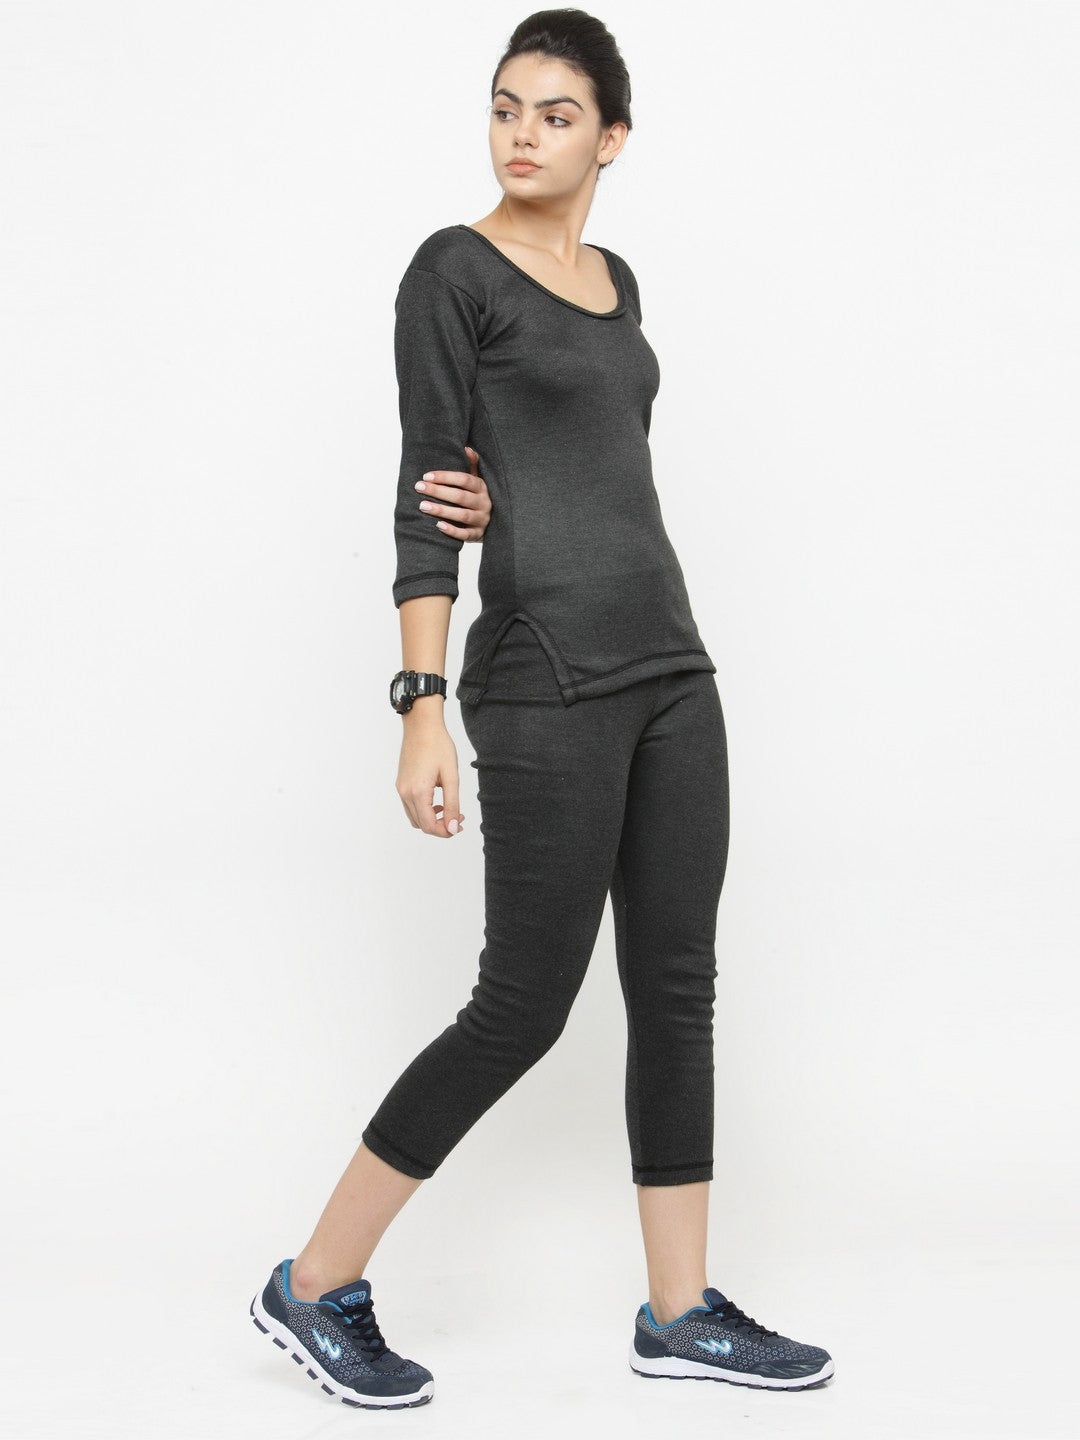 Women's Thermal Set : Sleeveless Top + Trouser (Dark Grey/Ladies Body